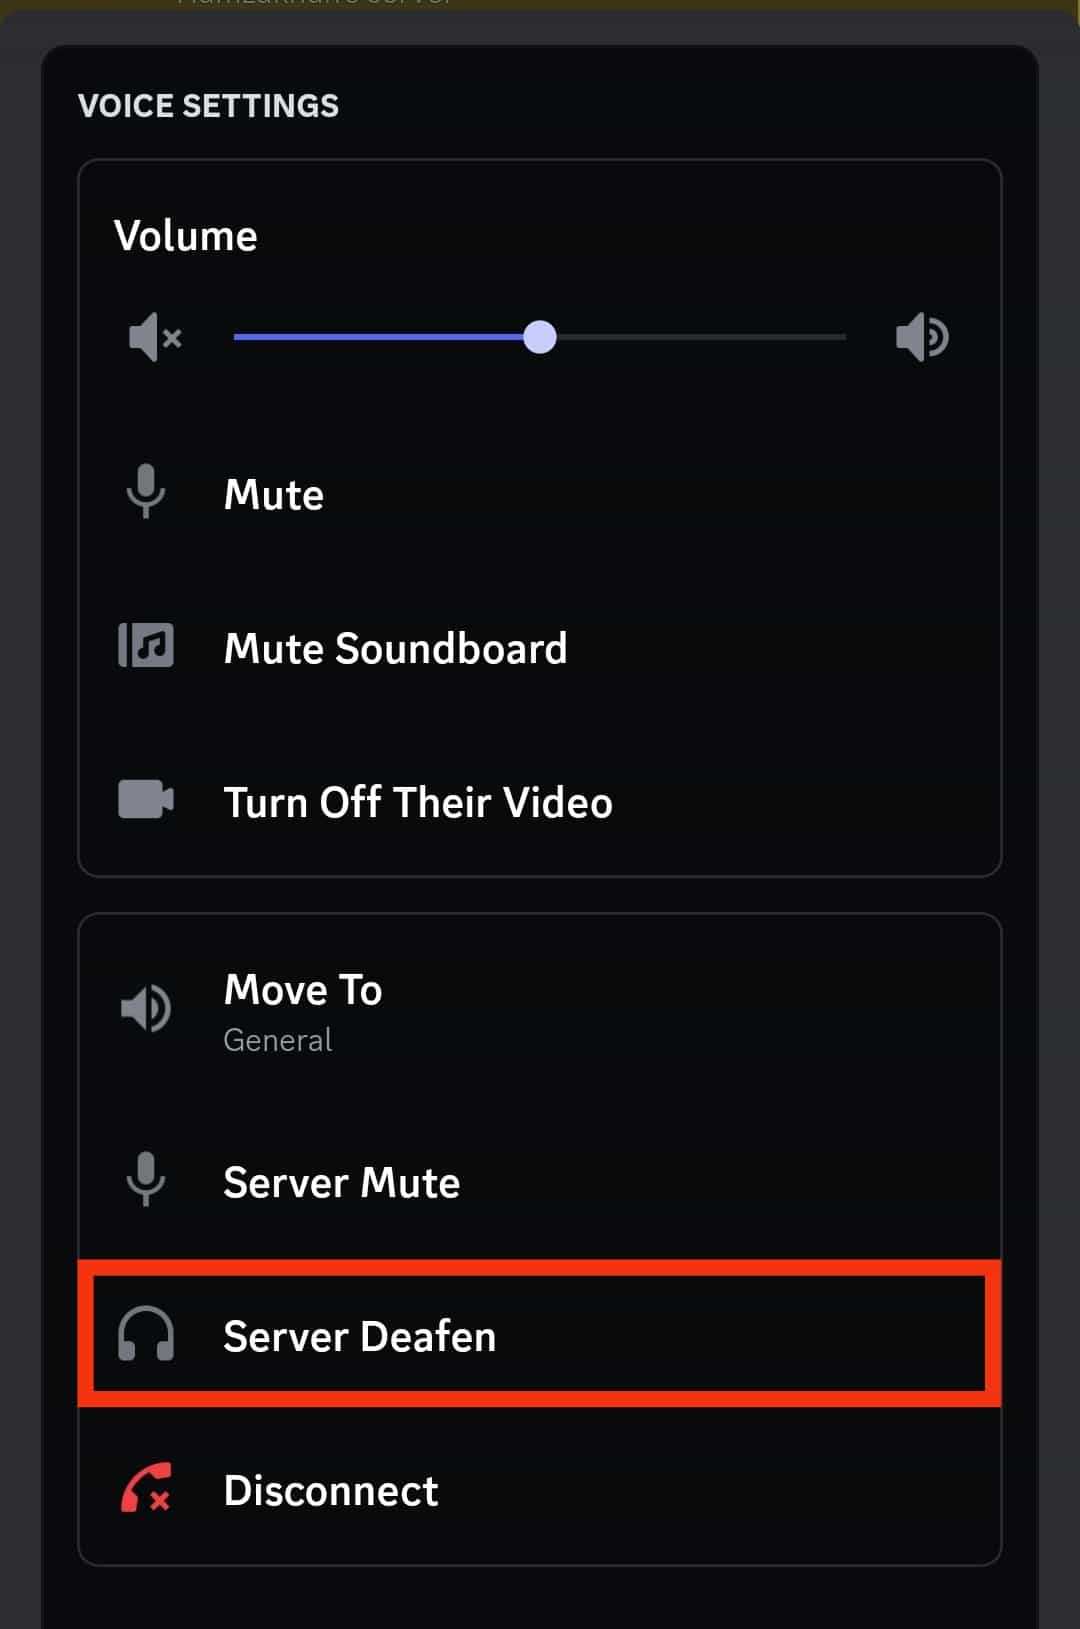 Select The Server Deafen Option